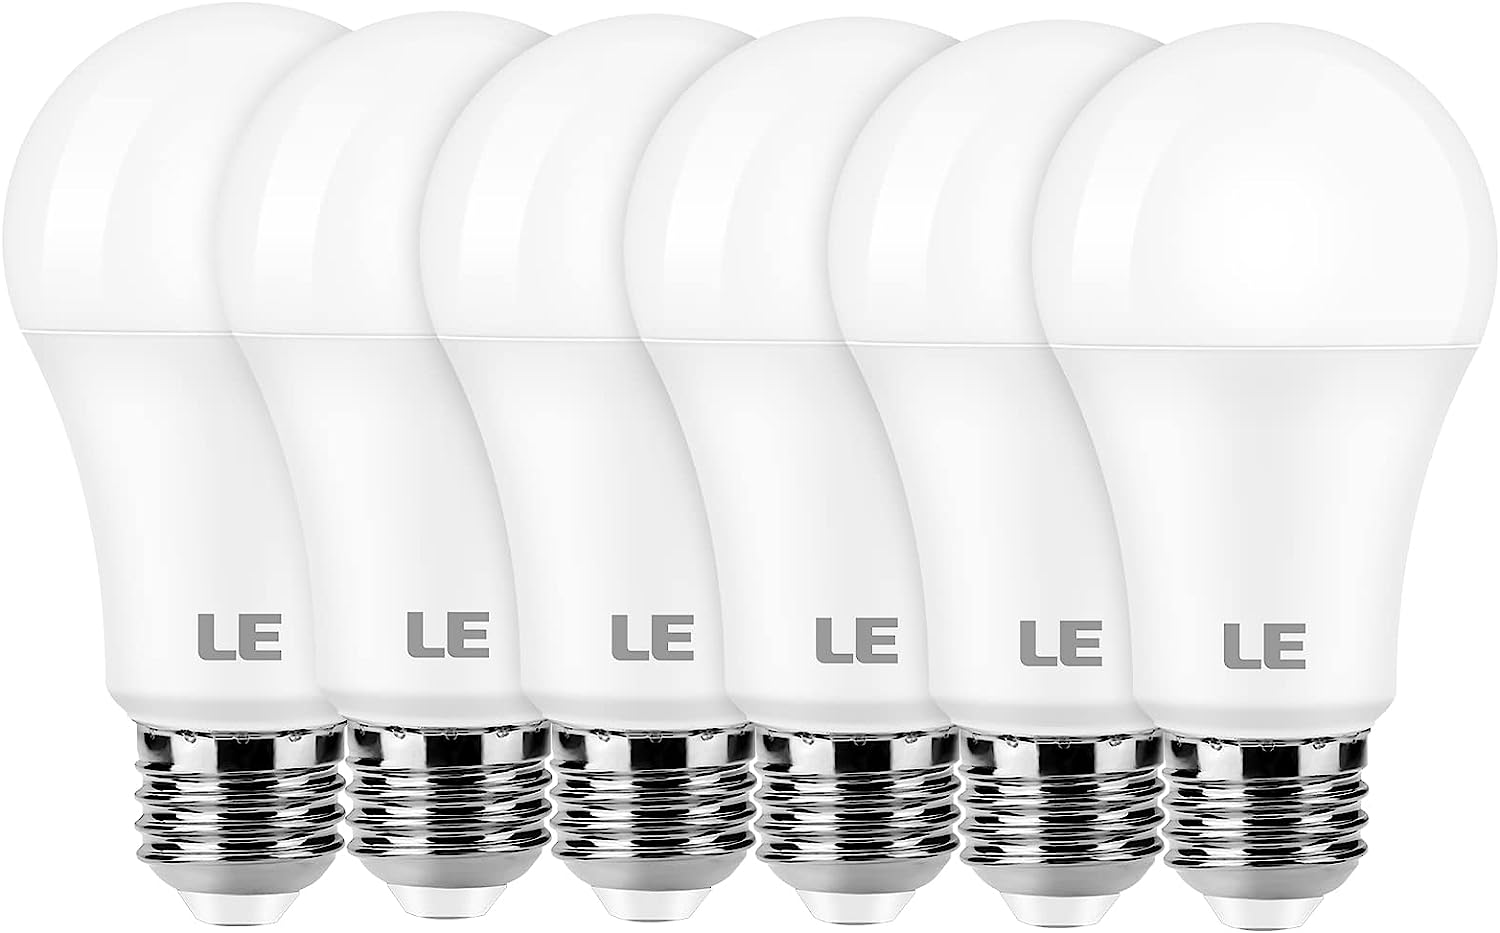 LE 100W Equivalent LED Light Bulbs, 14W 1500 Lumens [...]